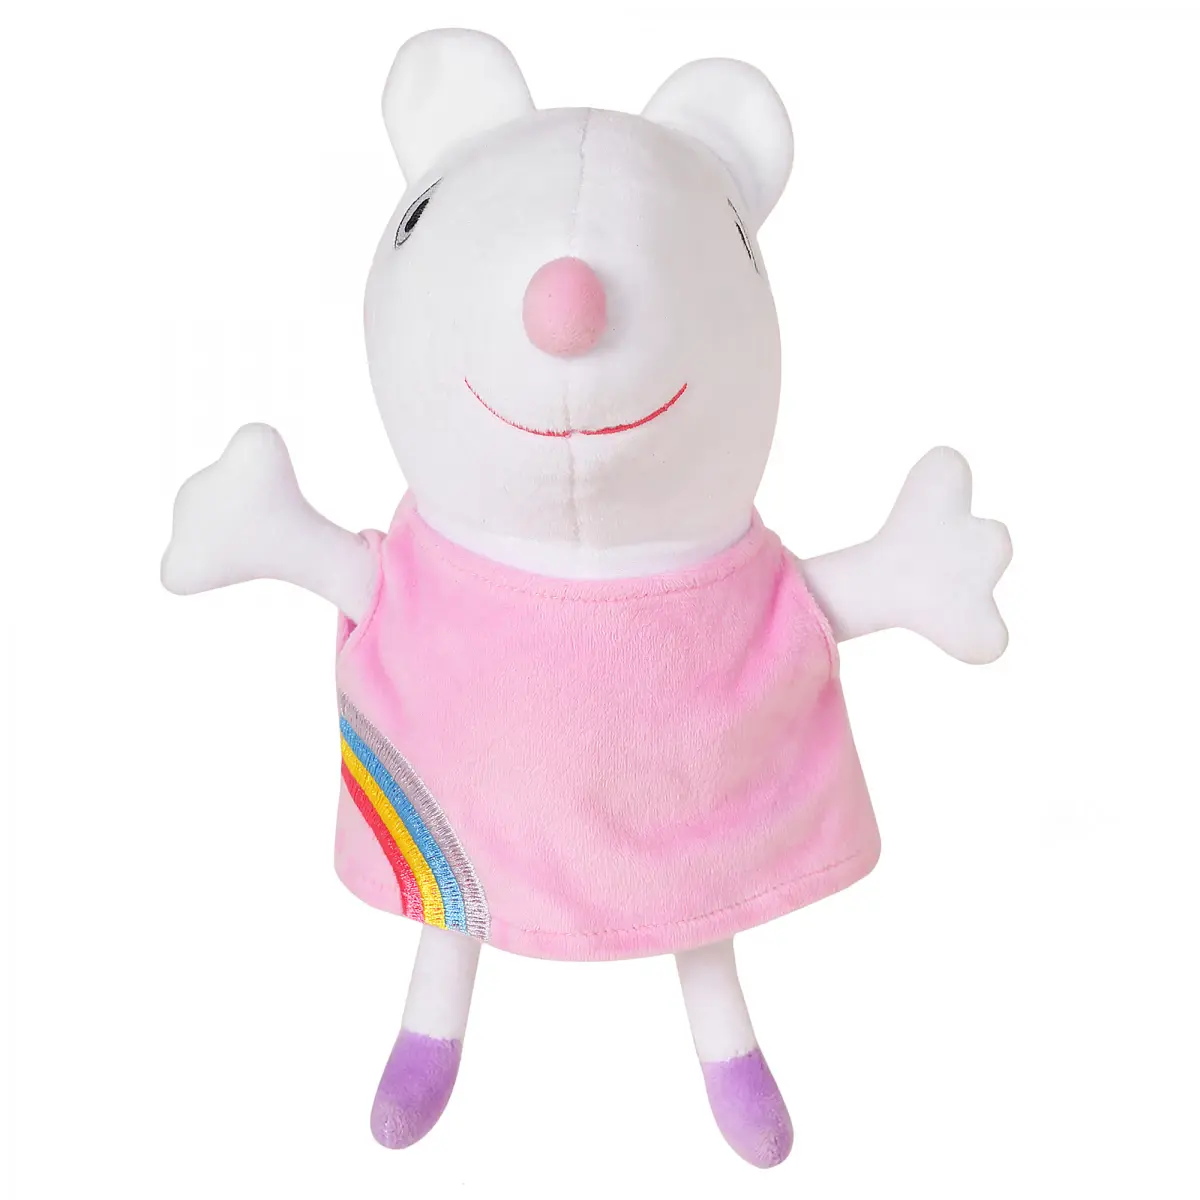 Peppa Pig Susie Sheep Soft Toy for Kids, 30cm, 18M+, White